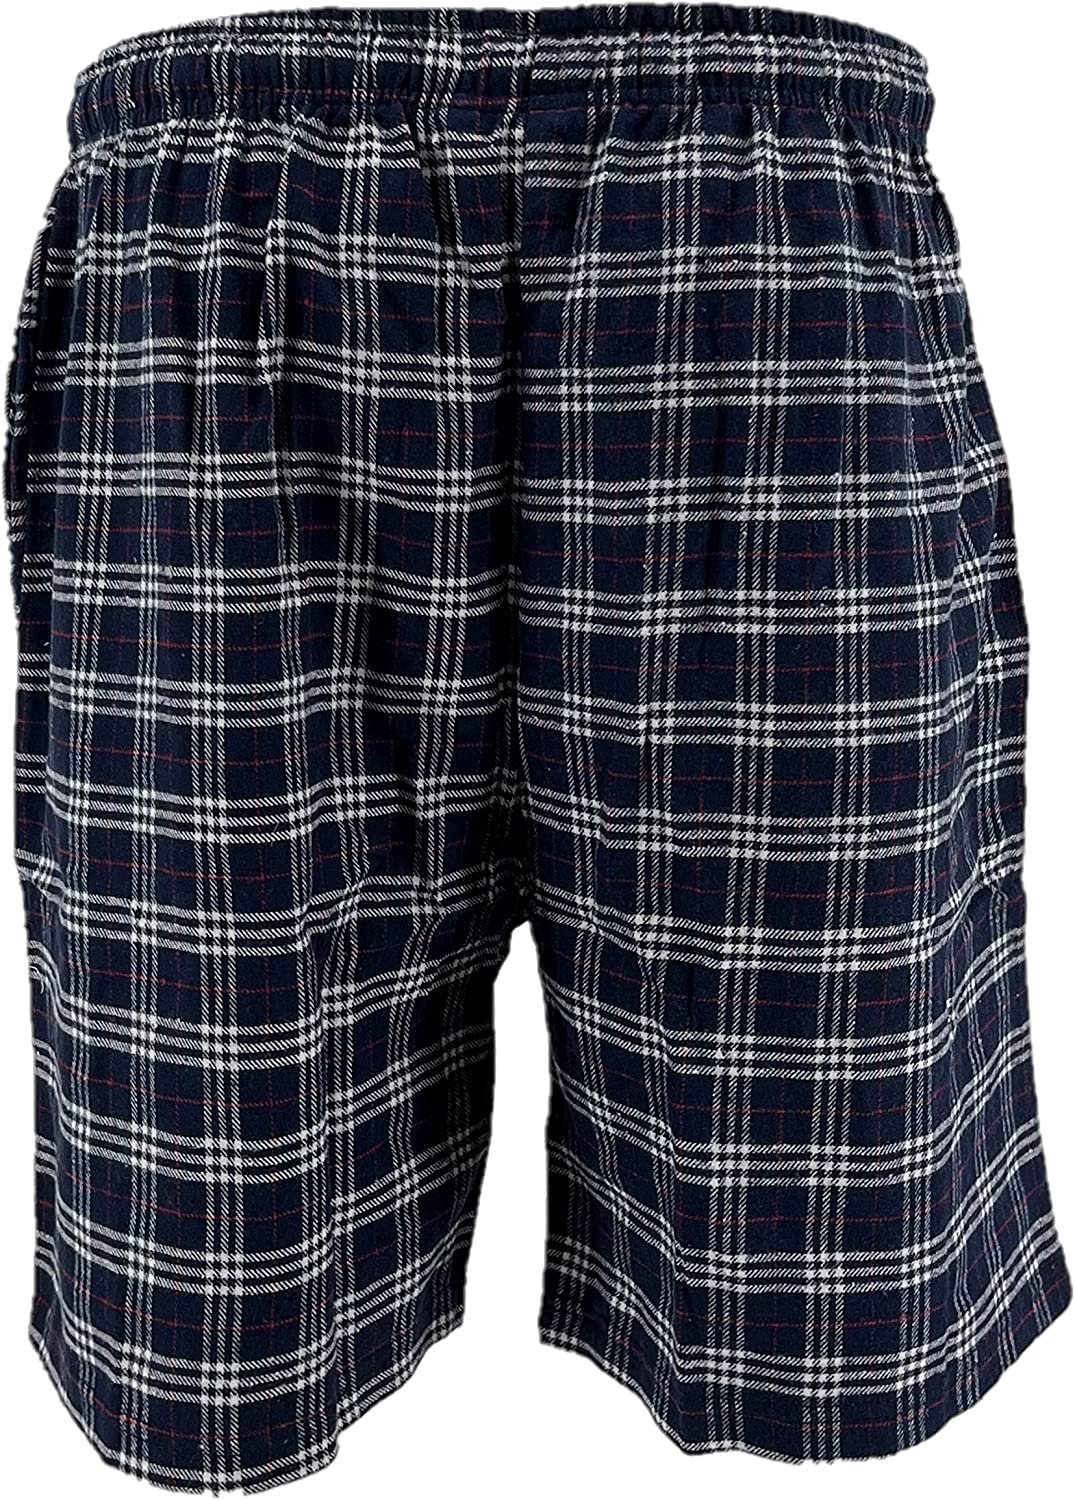 Men's Flannel Pajama Shorts Cotton Plaid Shorts Sleep Lounge